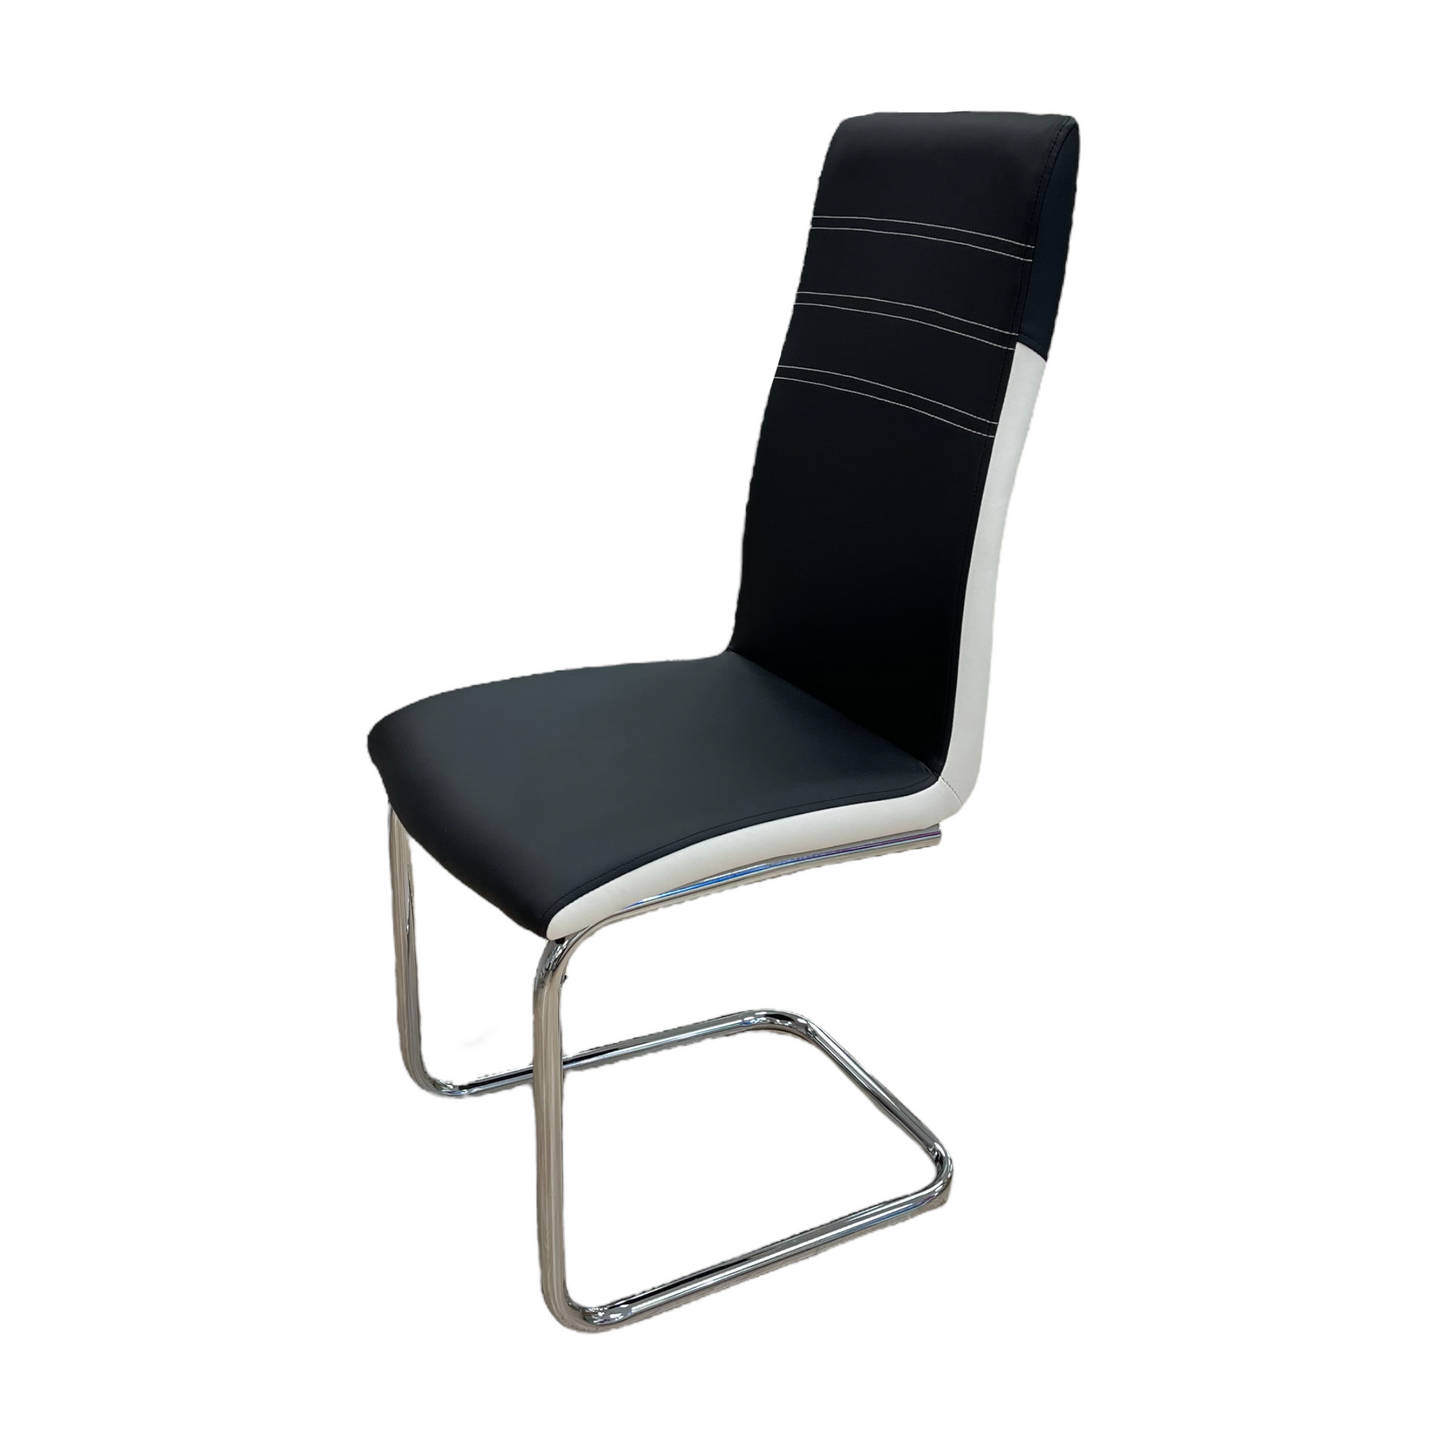 Chair LDC-16002